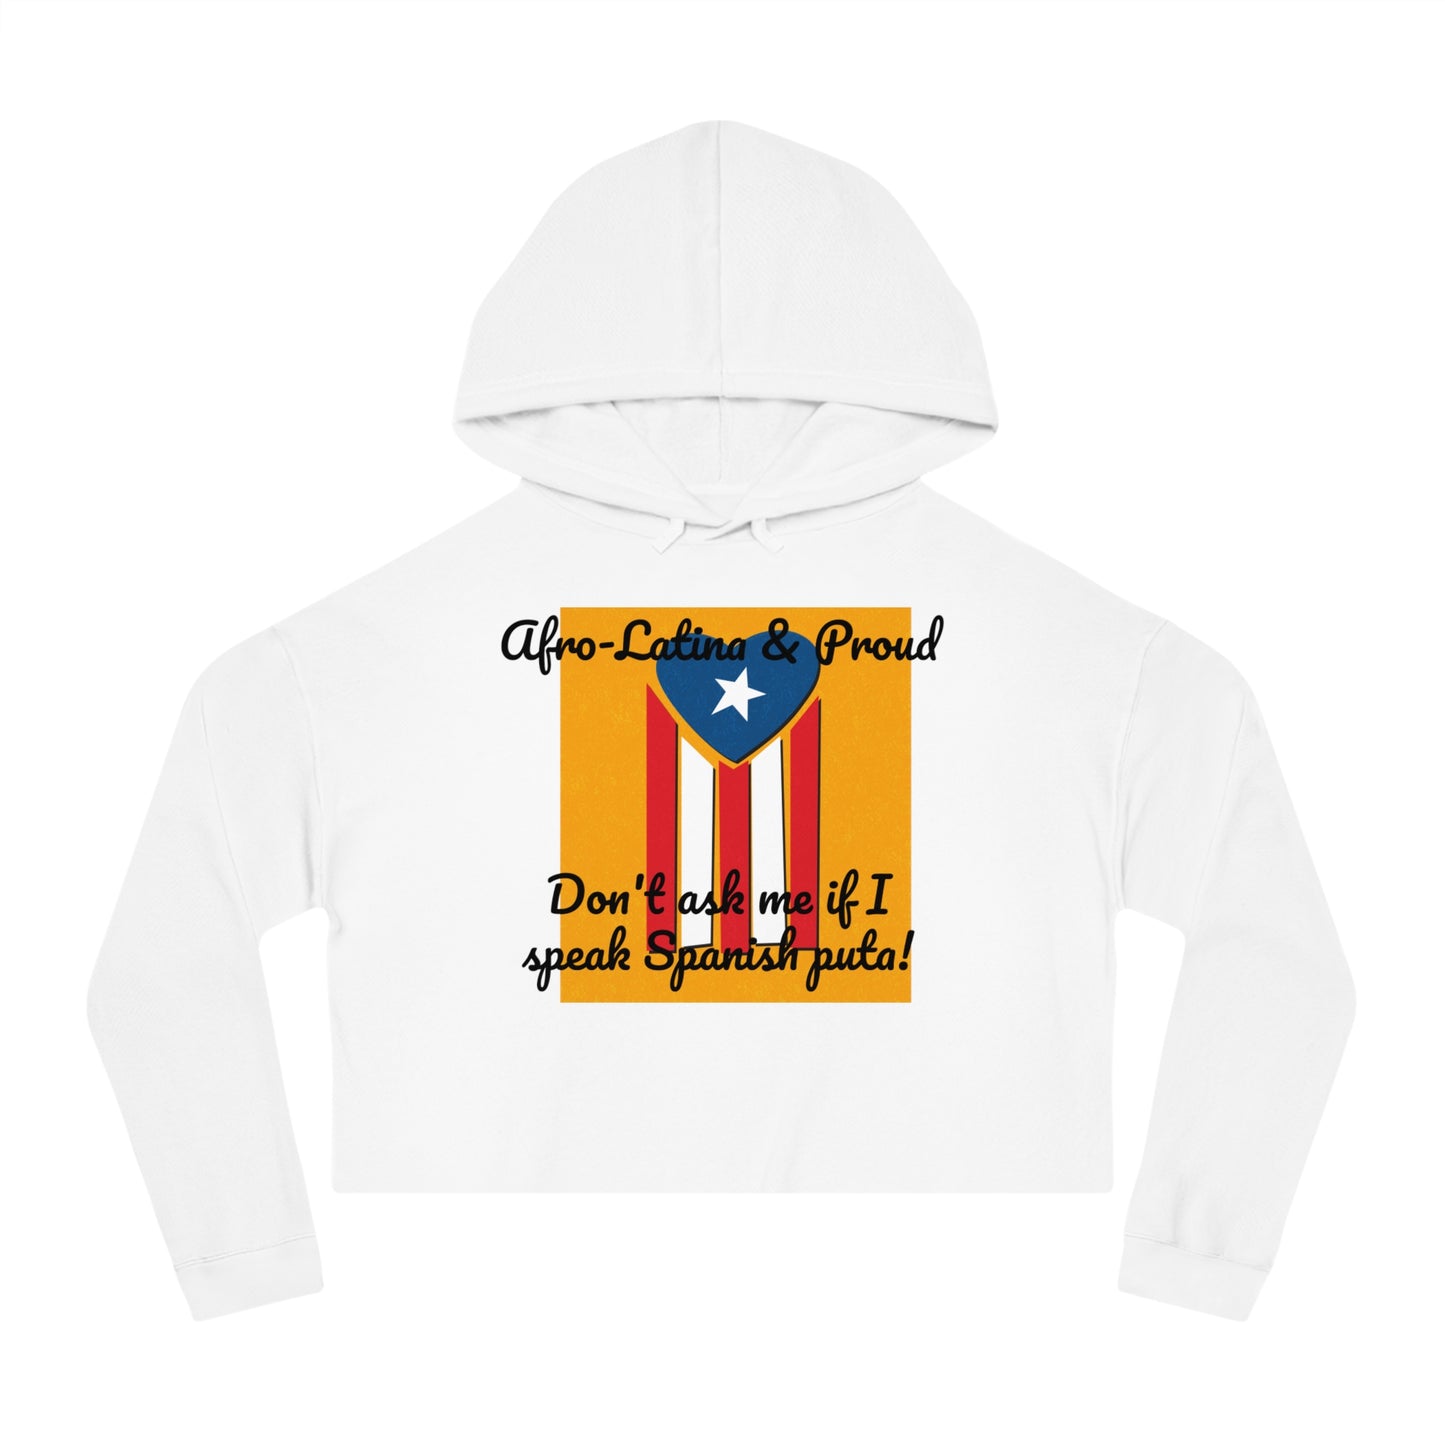 Don't Ask Me if I Speak Spanish Puta Women’s Cropped Hooded Sweatshirt